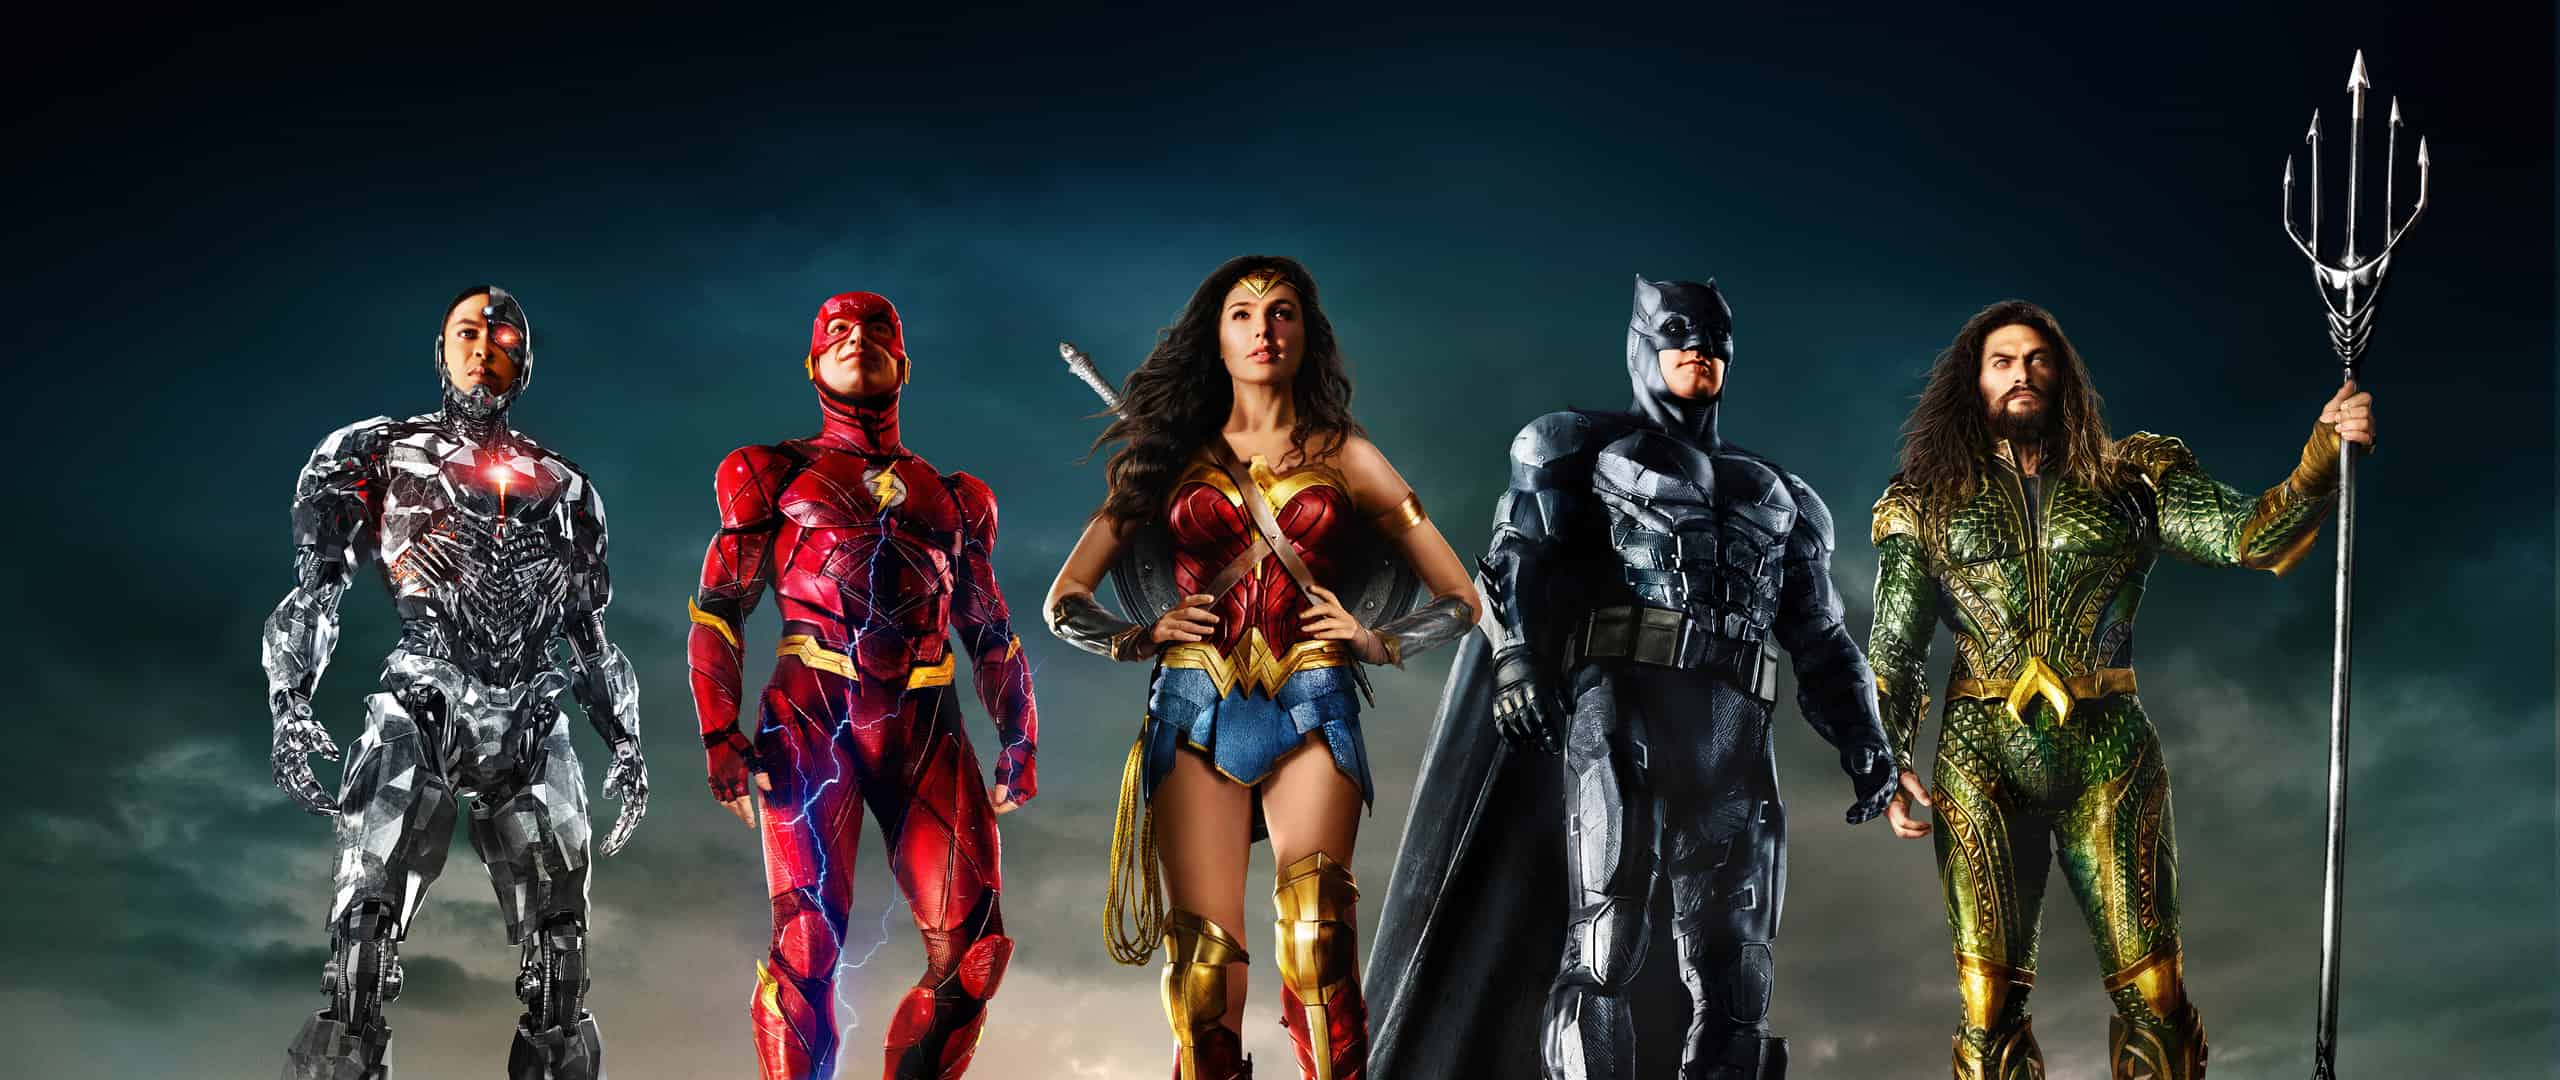 Justice League 4K 2017 big poster